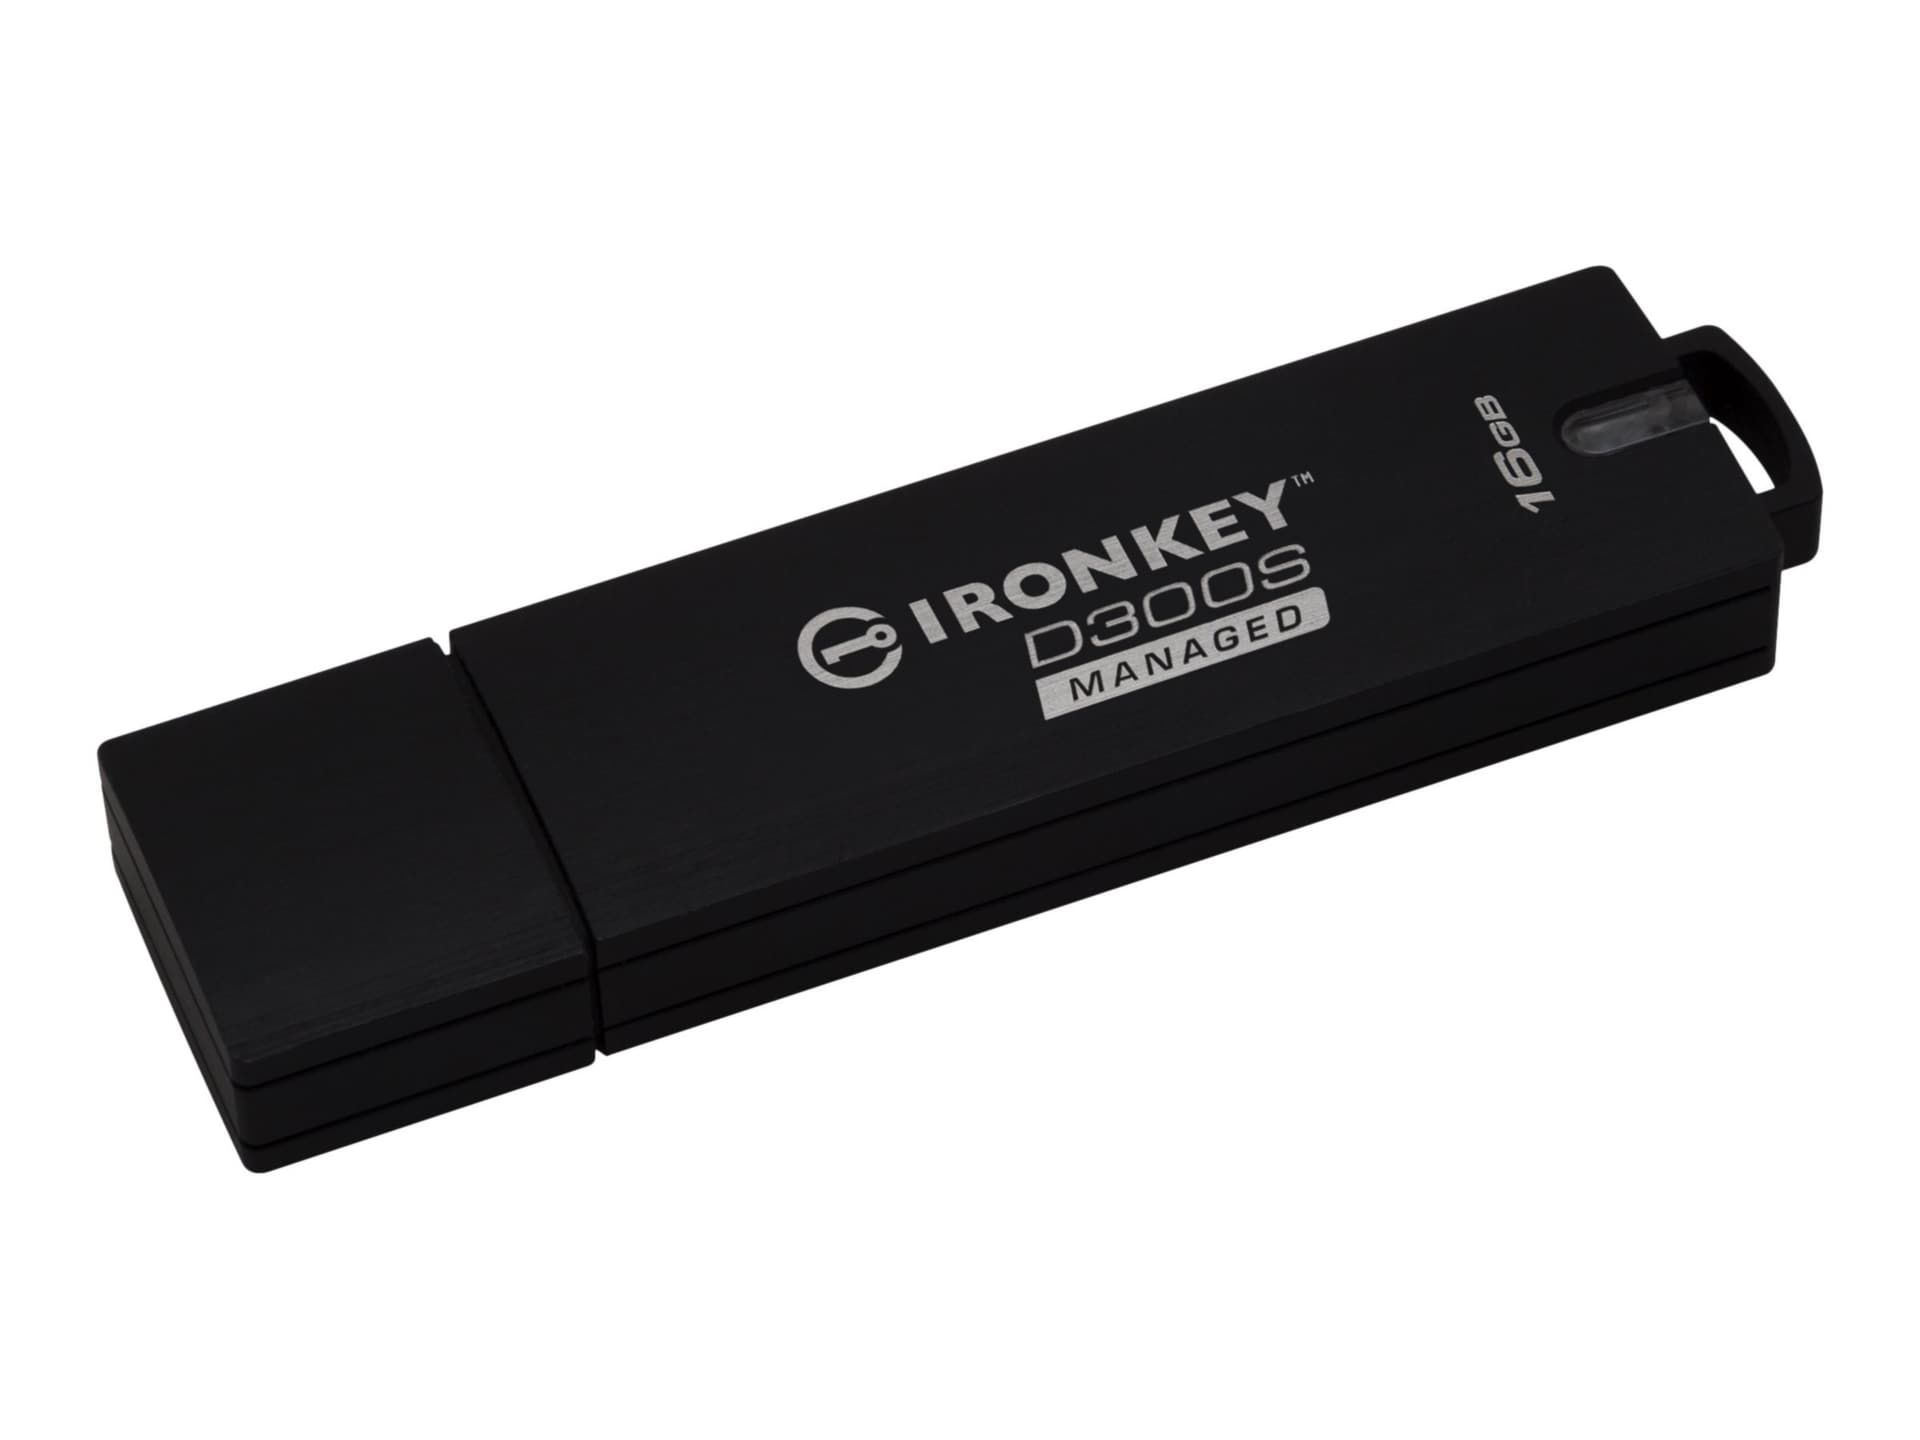 IronKey D300S Managed - USB flash drive - 16 GB